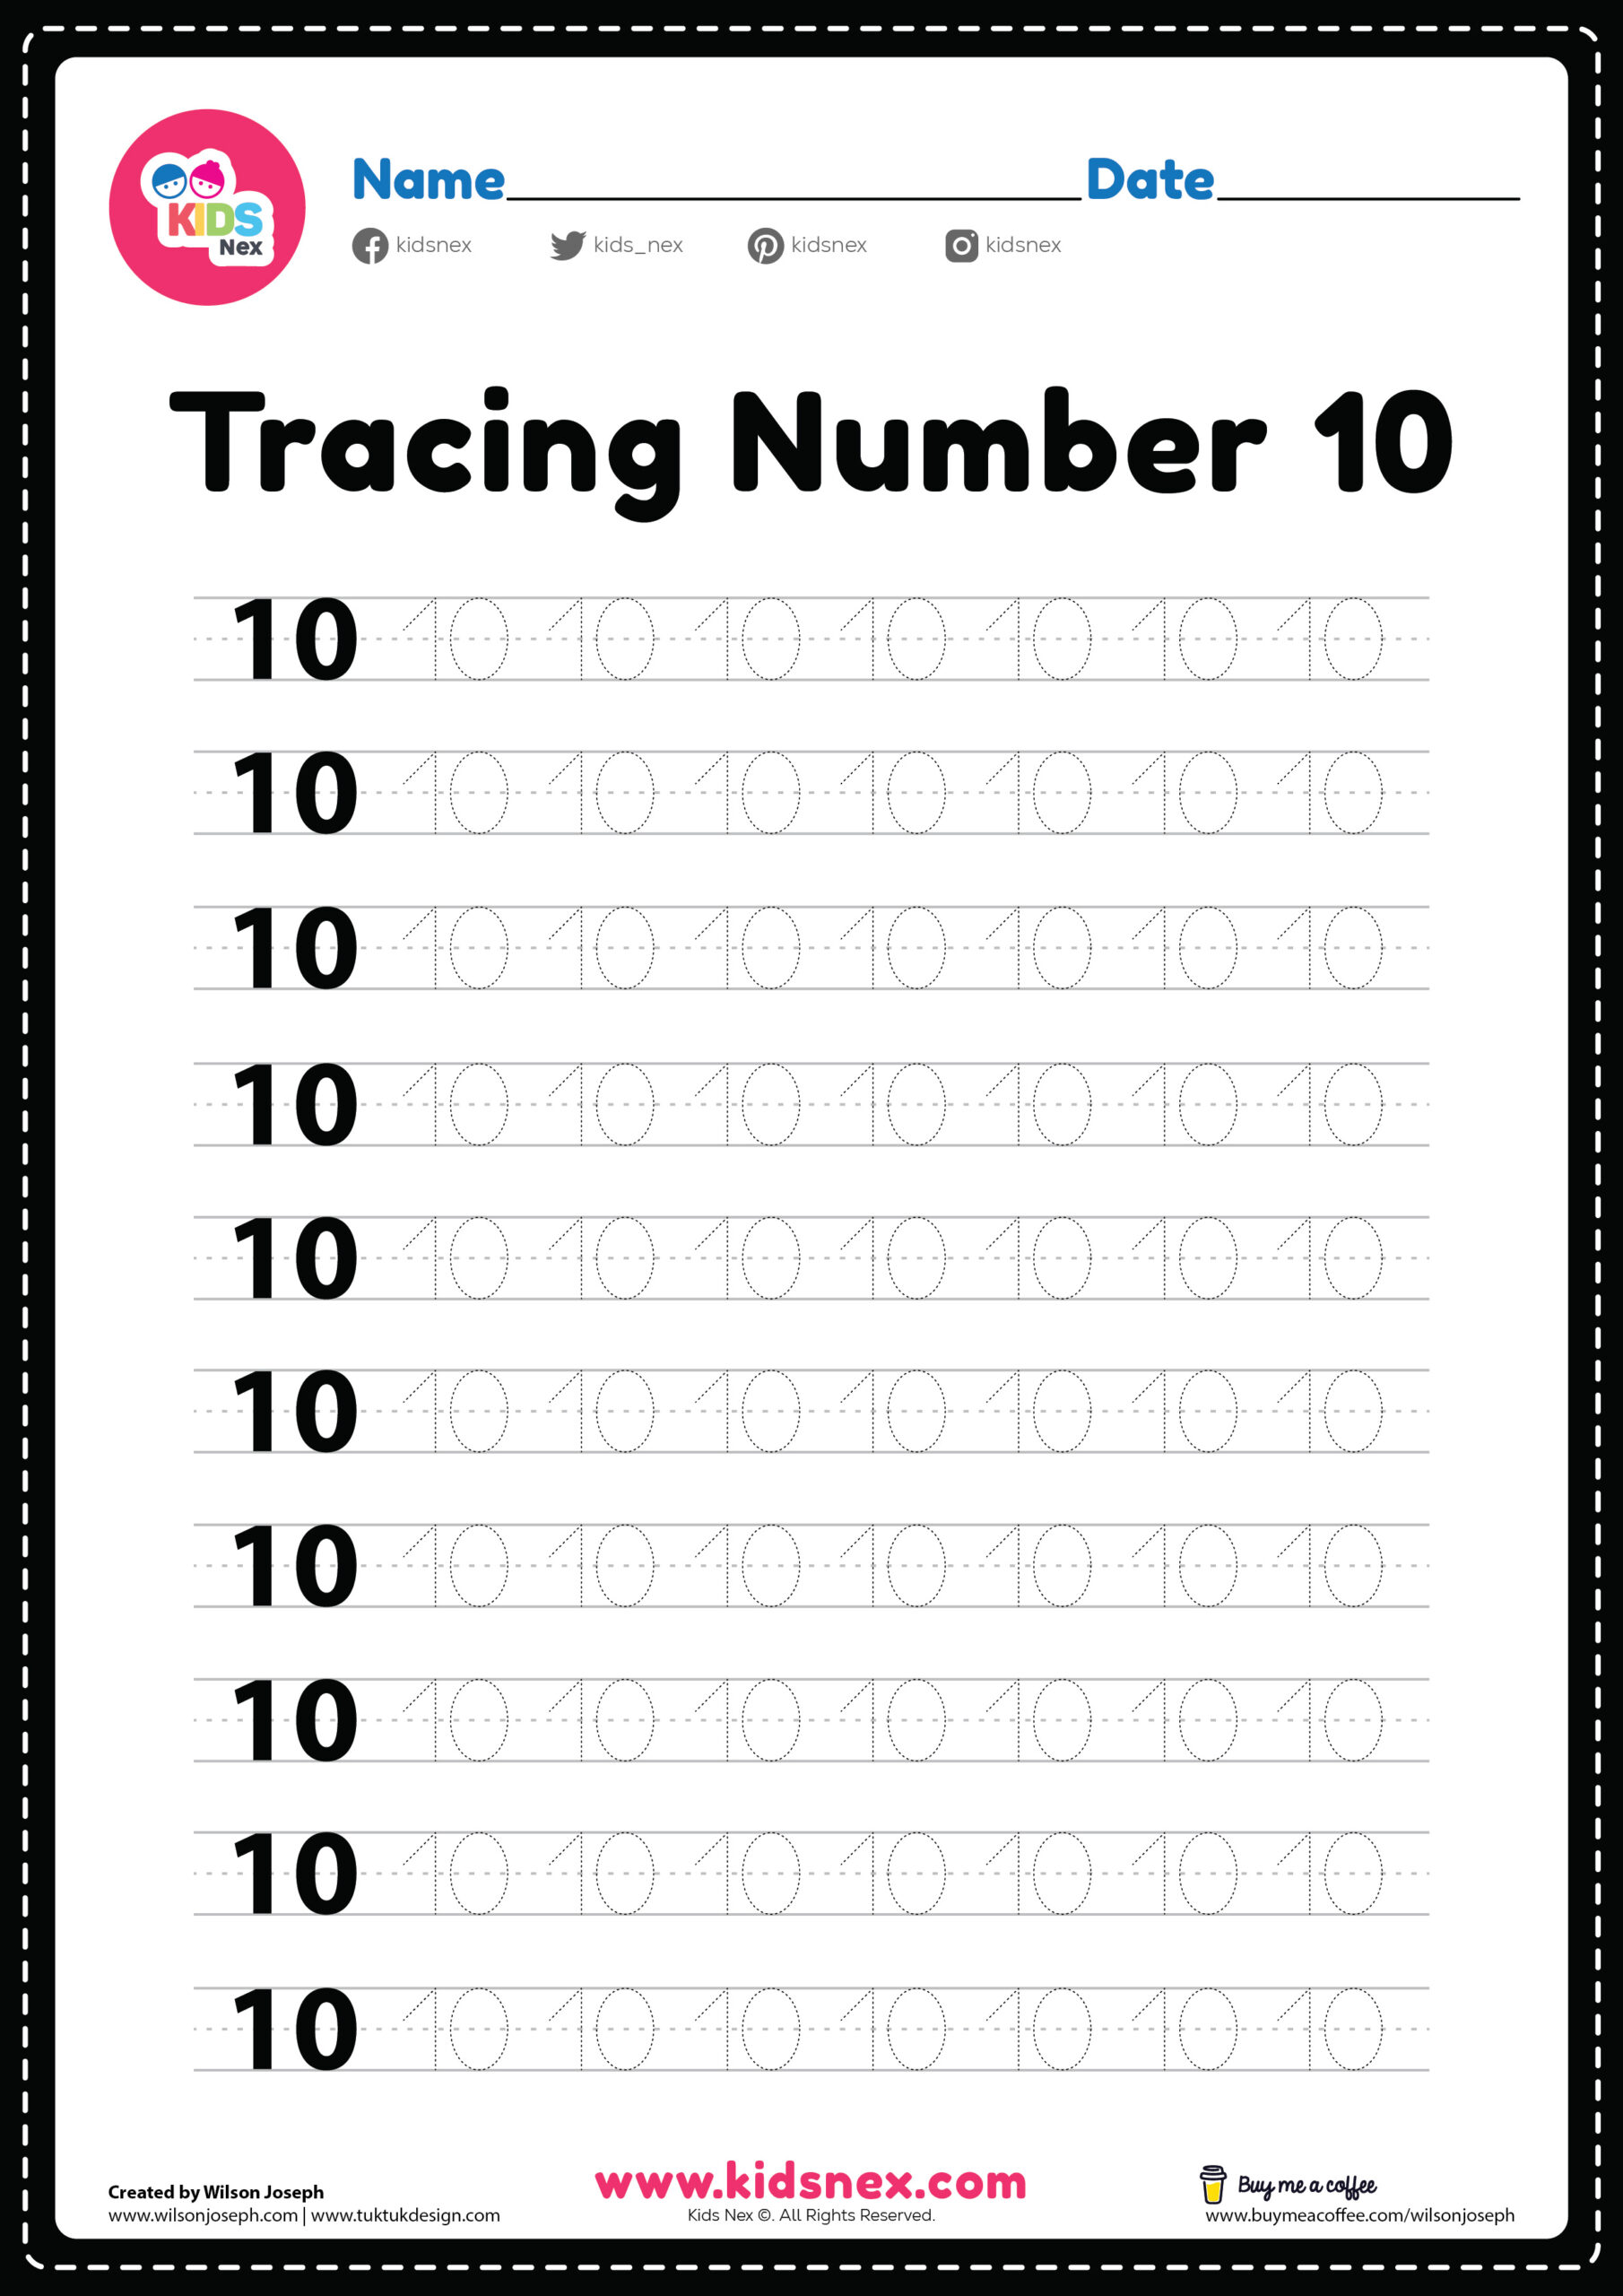 Tracing number 10 worksheet